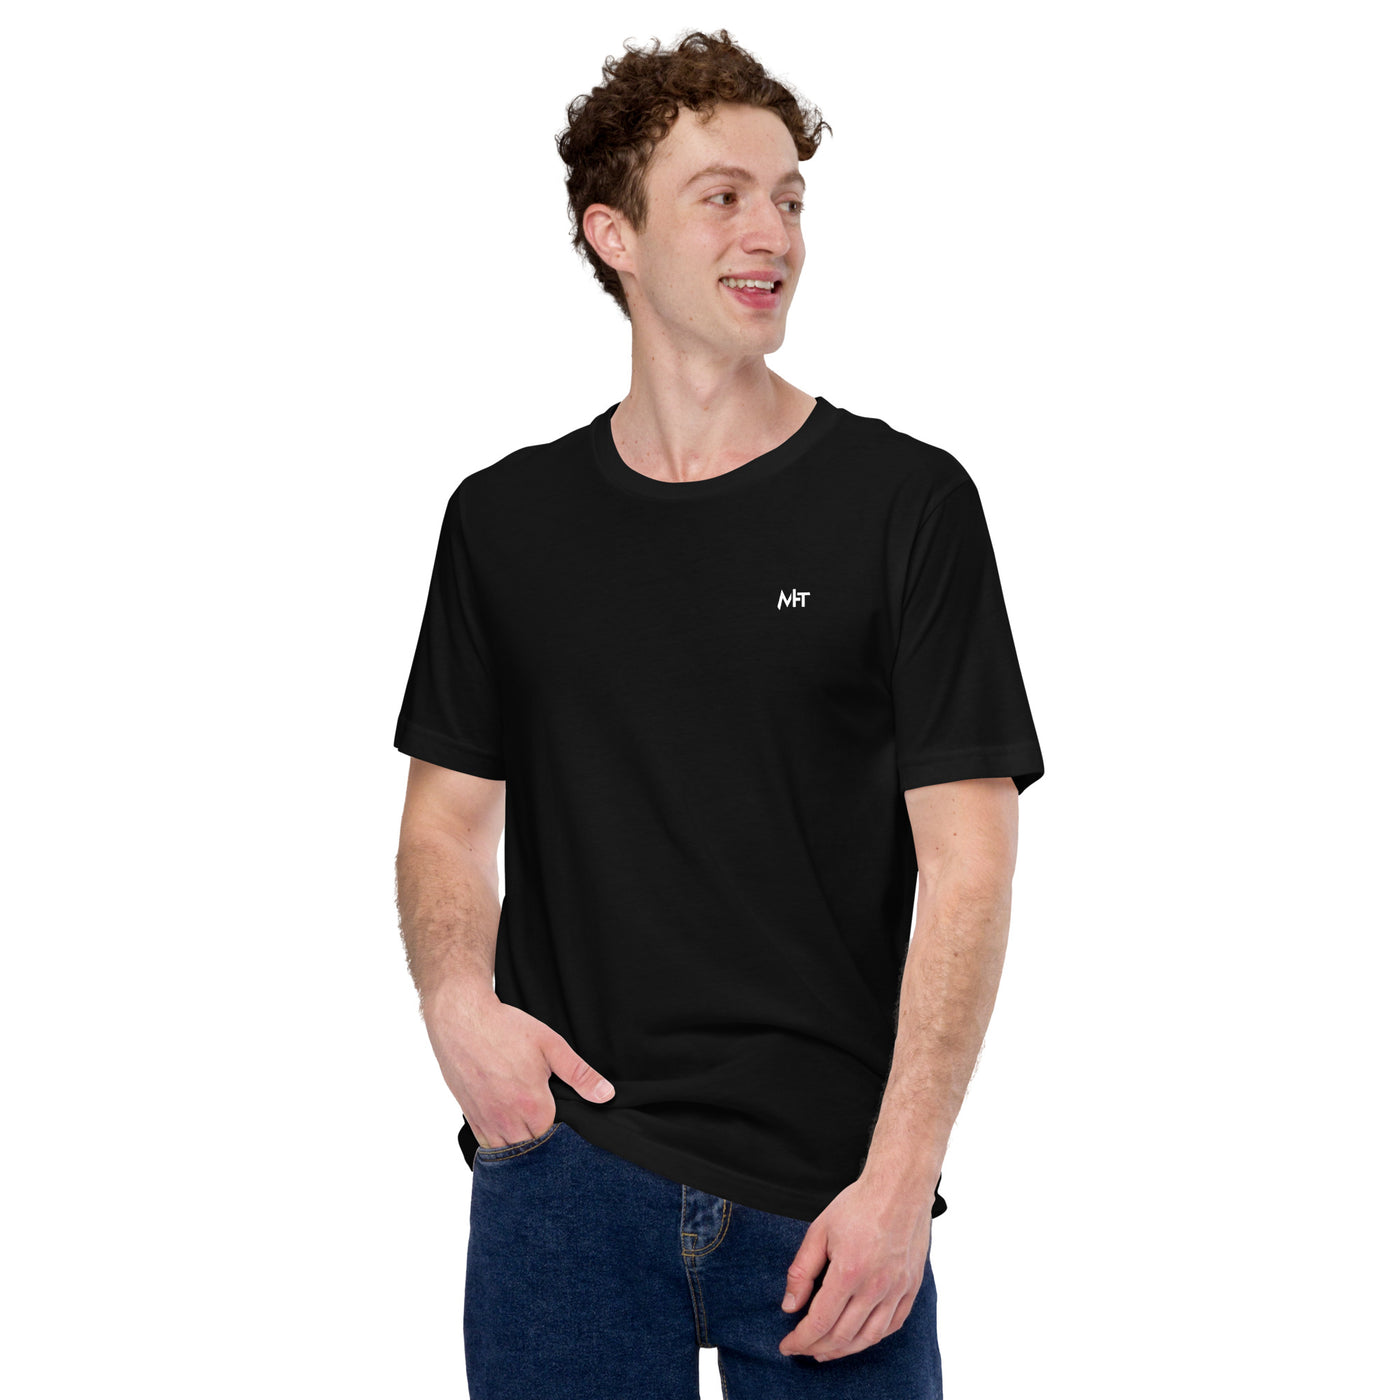 Men are like Bitcoin - Unisex t-shirt ( Back Print )